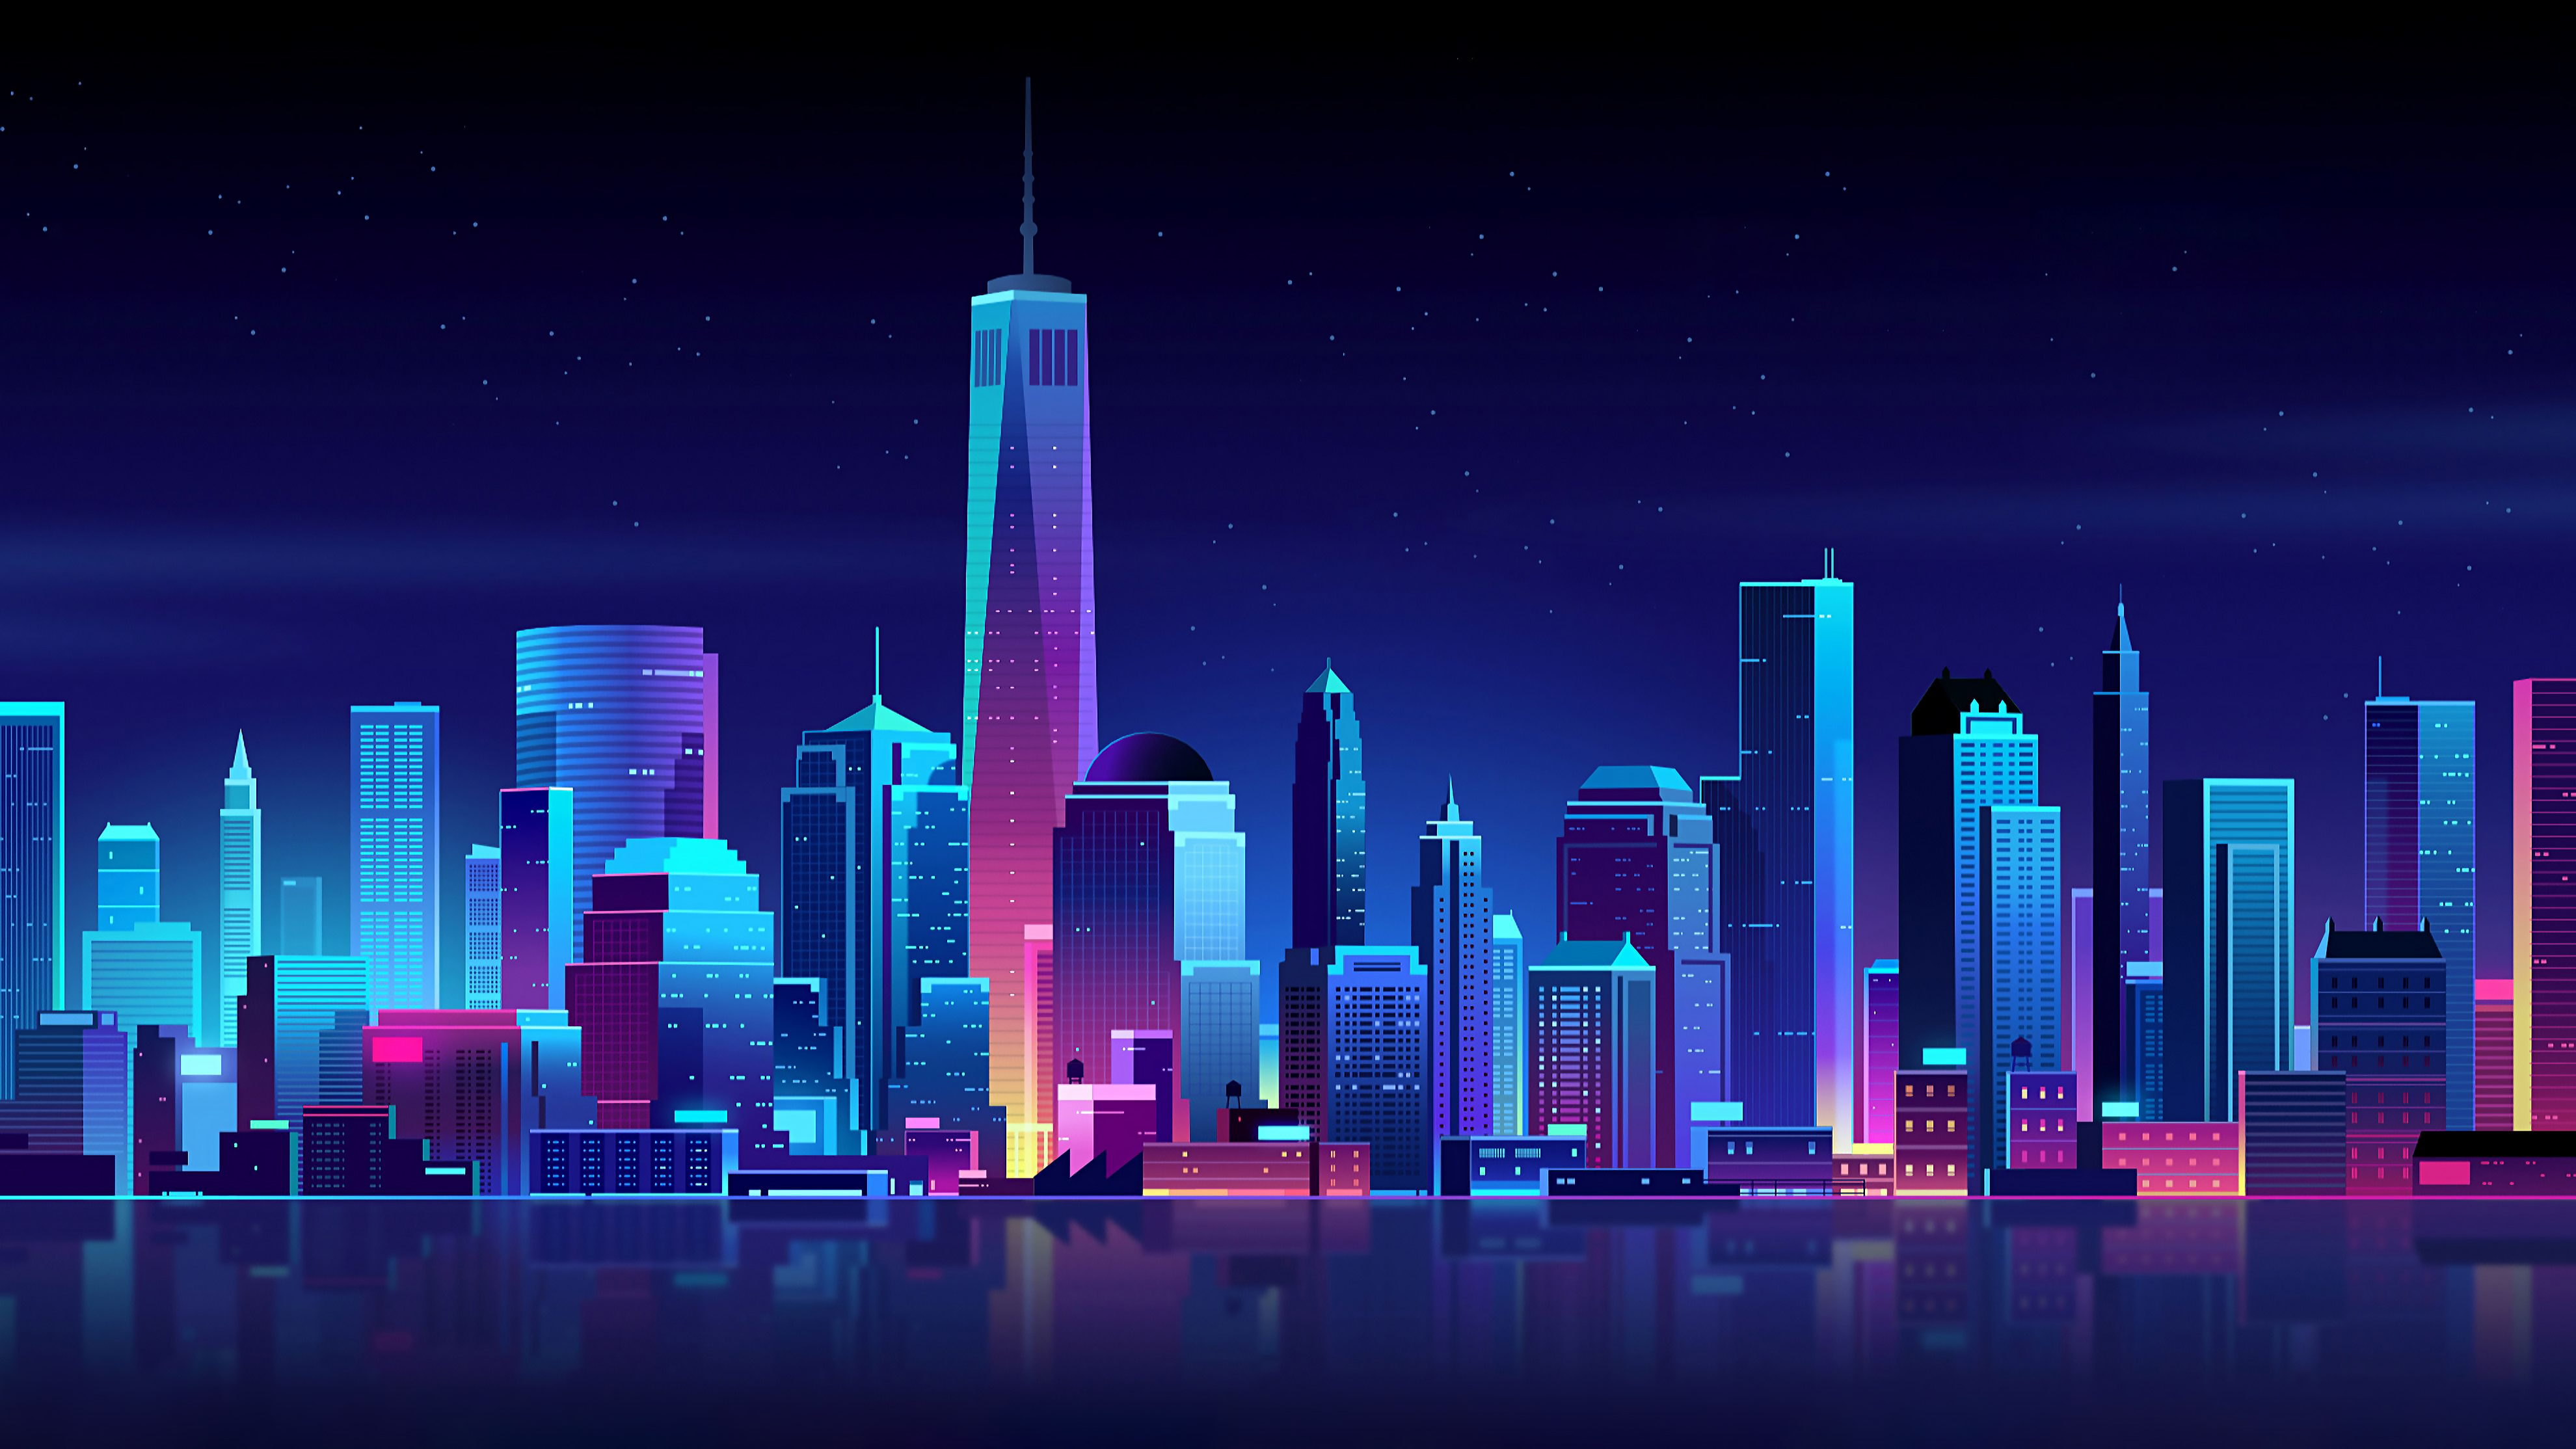 Night Pixel City Background - 3960x2228 Wallpaper 